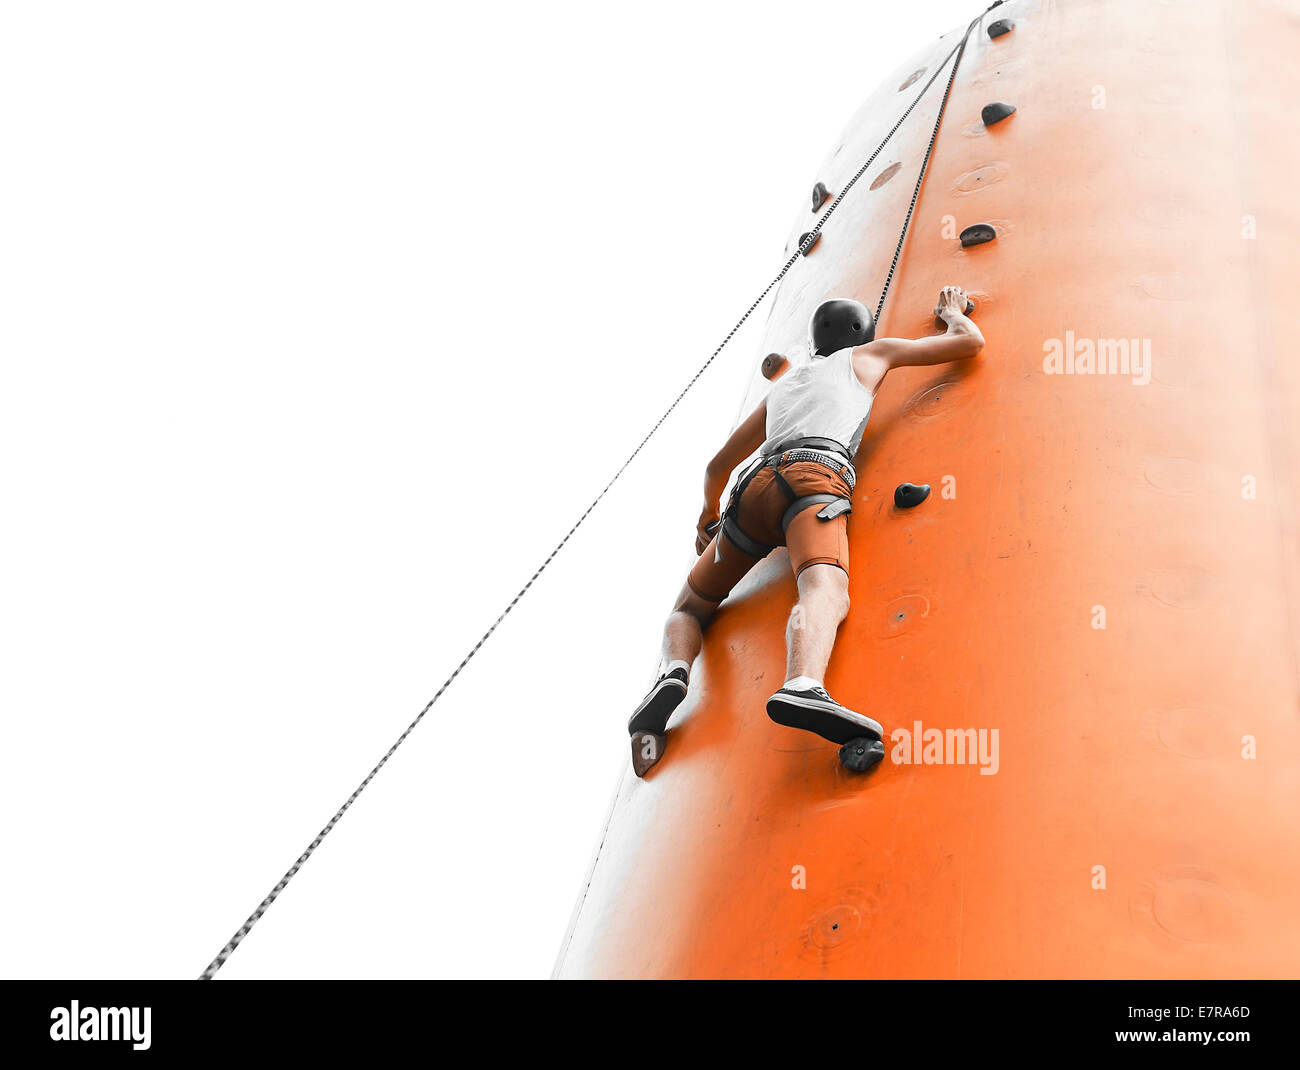 Young man climbing on an artificial wall Stock Photo